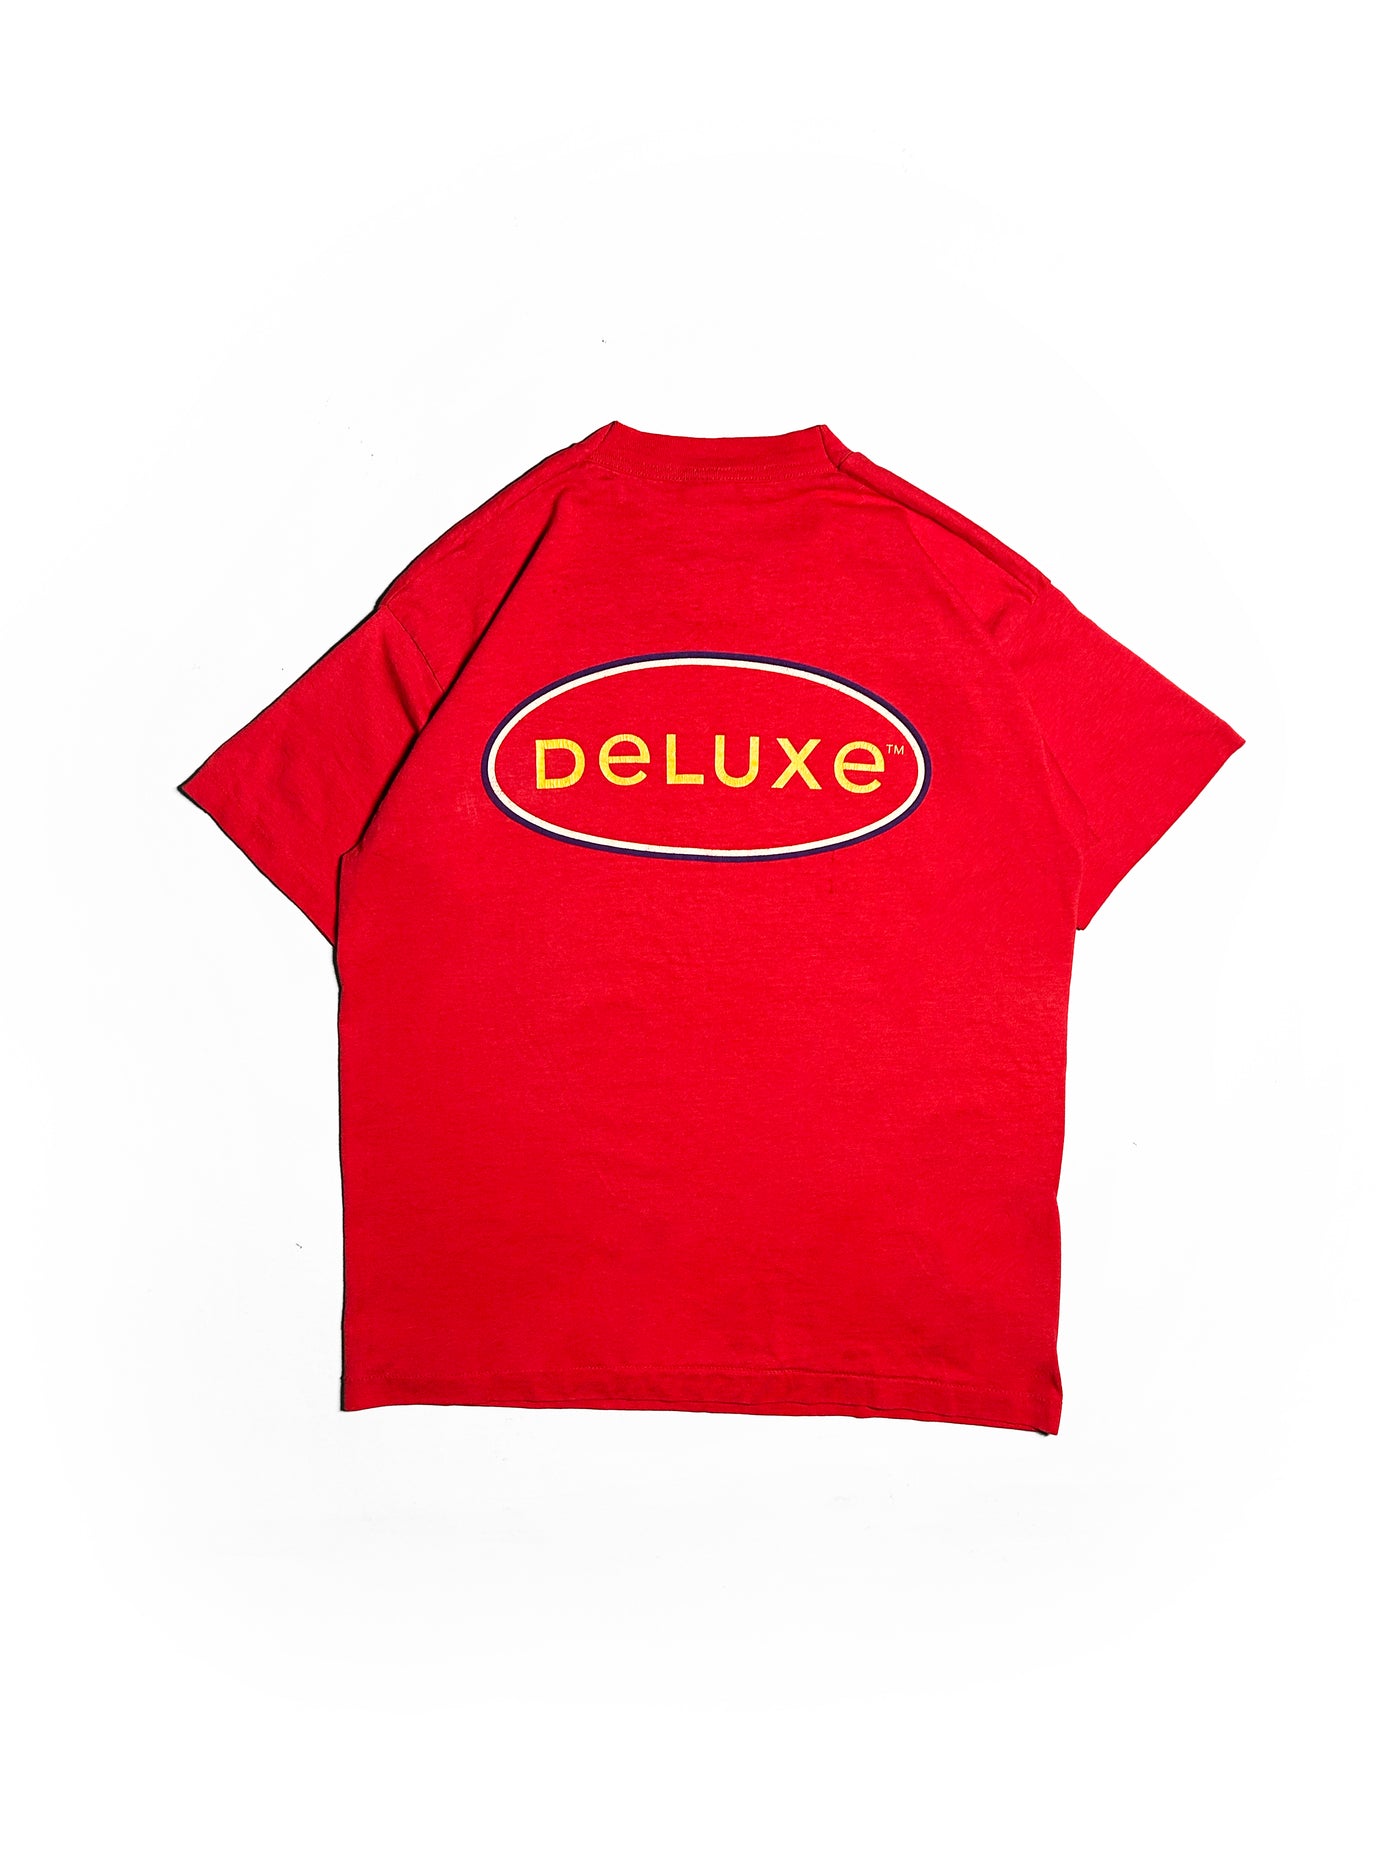 Vintage 90s McDonald’s Deluxe Promo T-Shirt